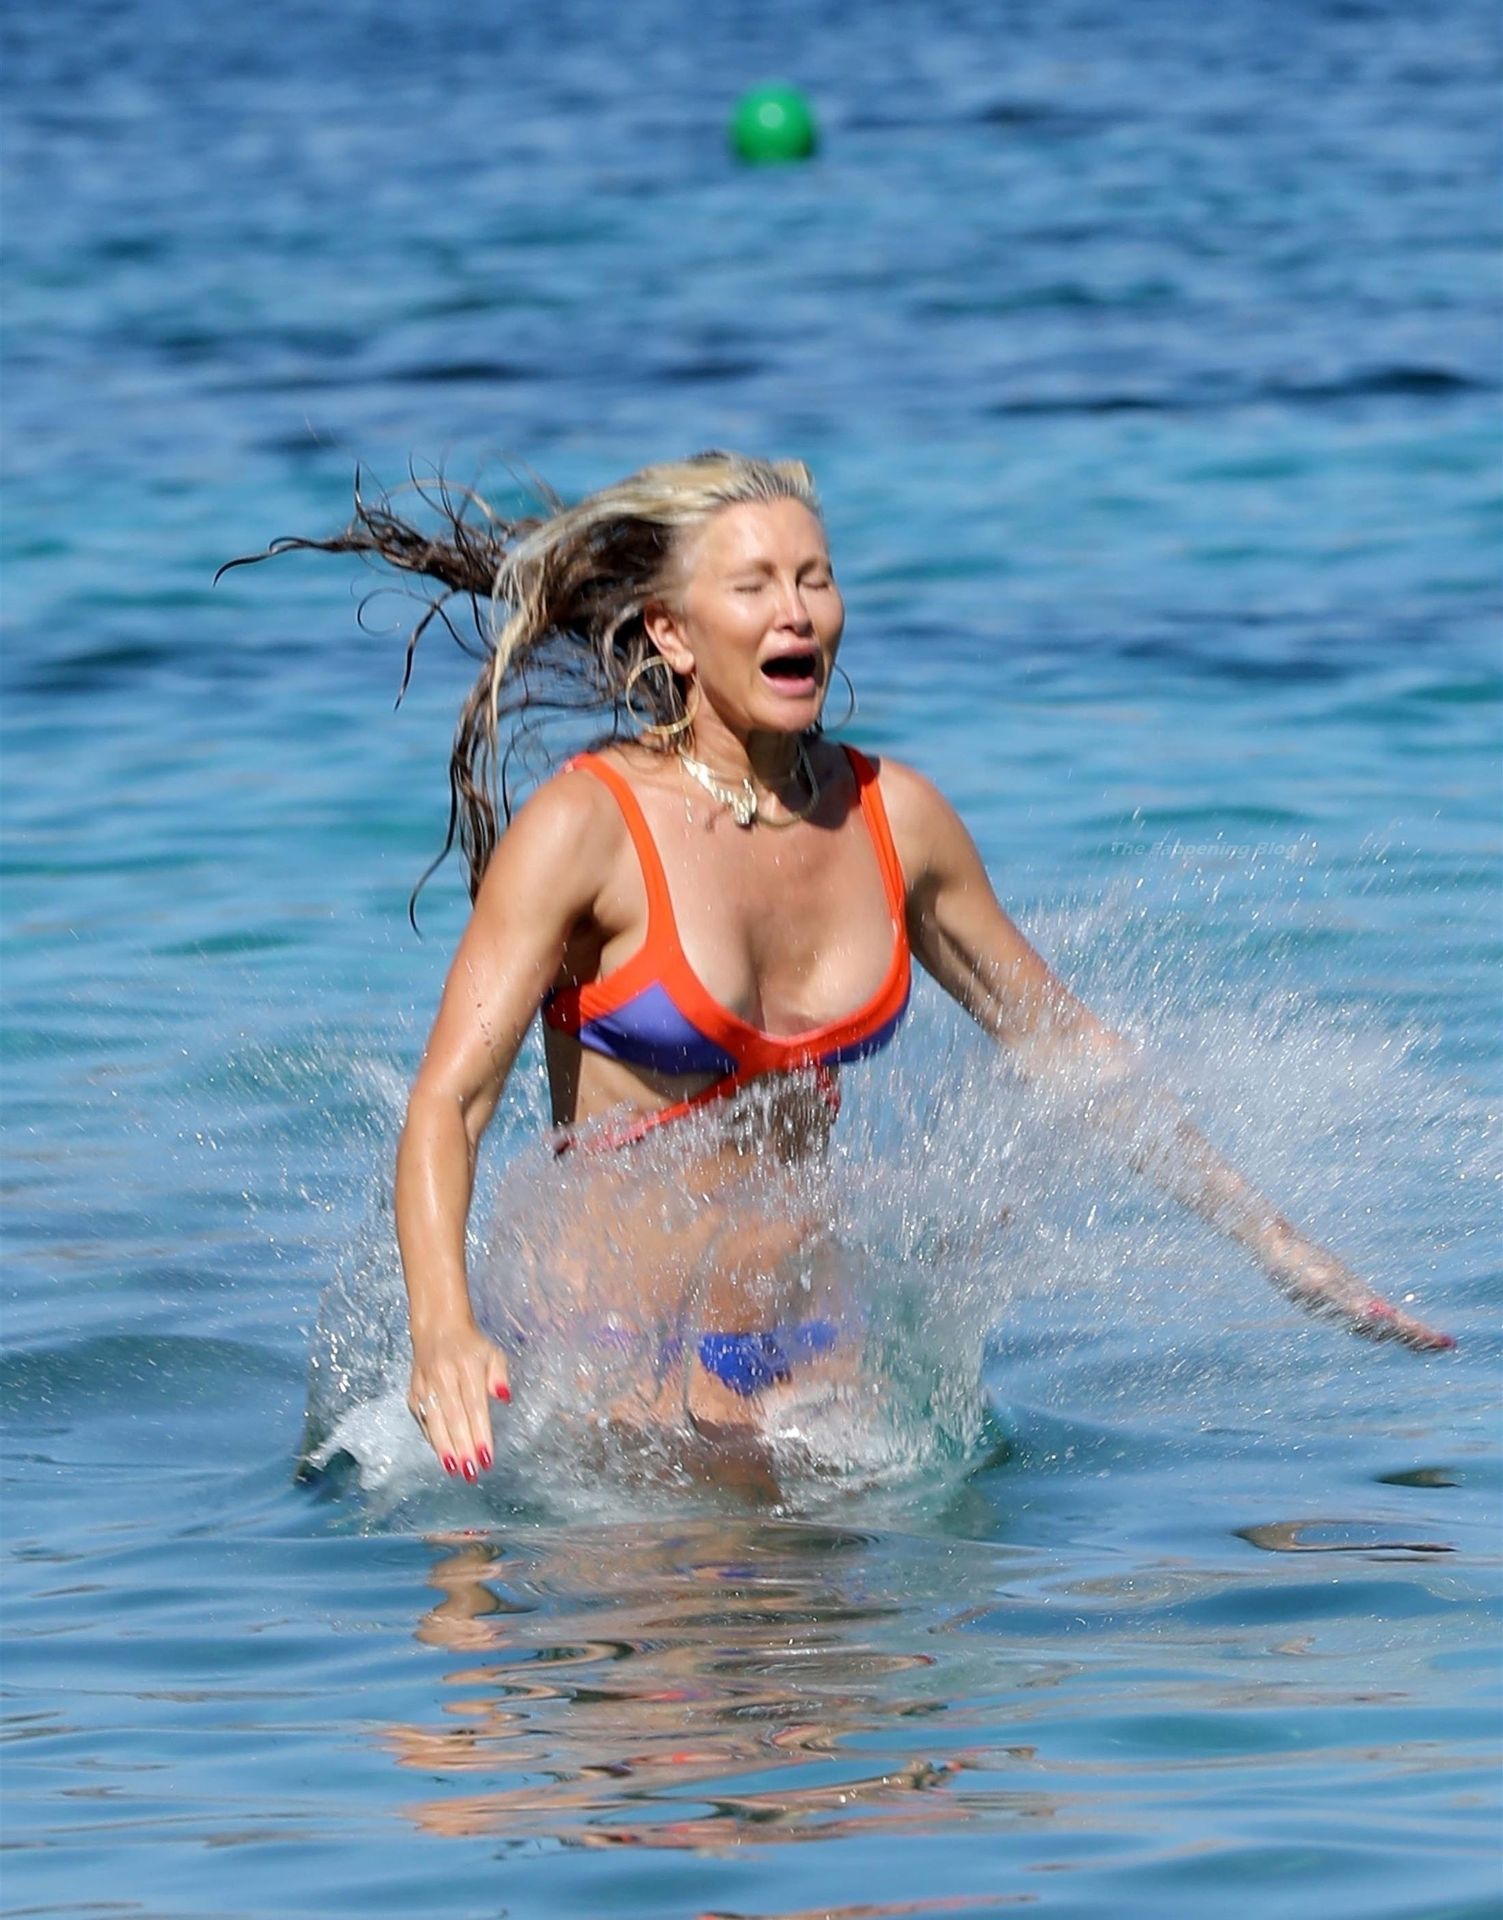 Caprice Bourret Enjoys Her Holiday in Ibiza (18 Photos)